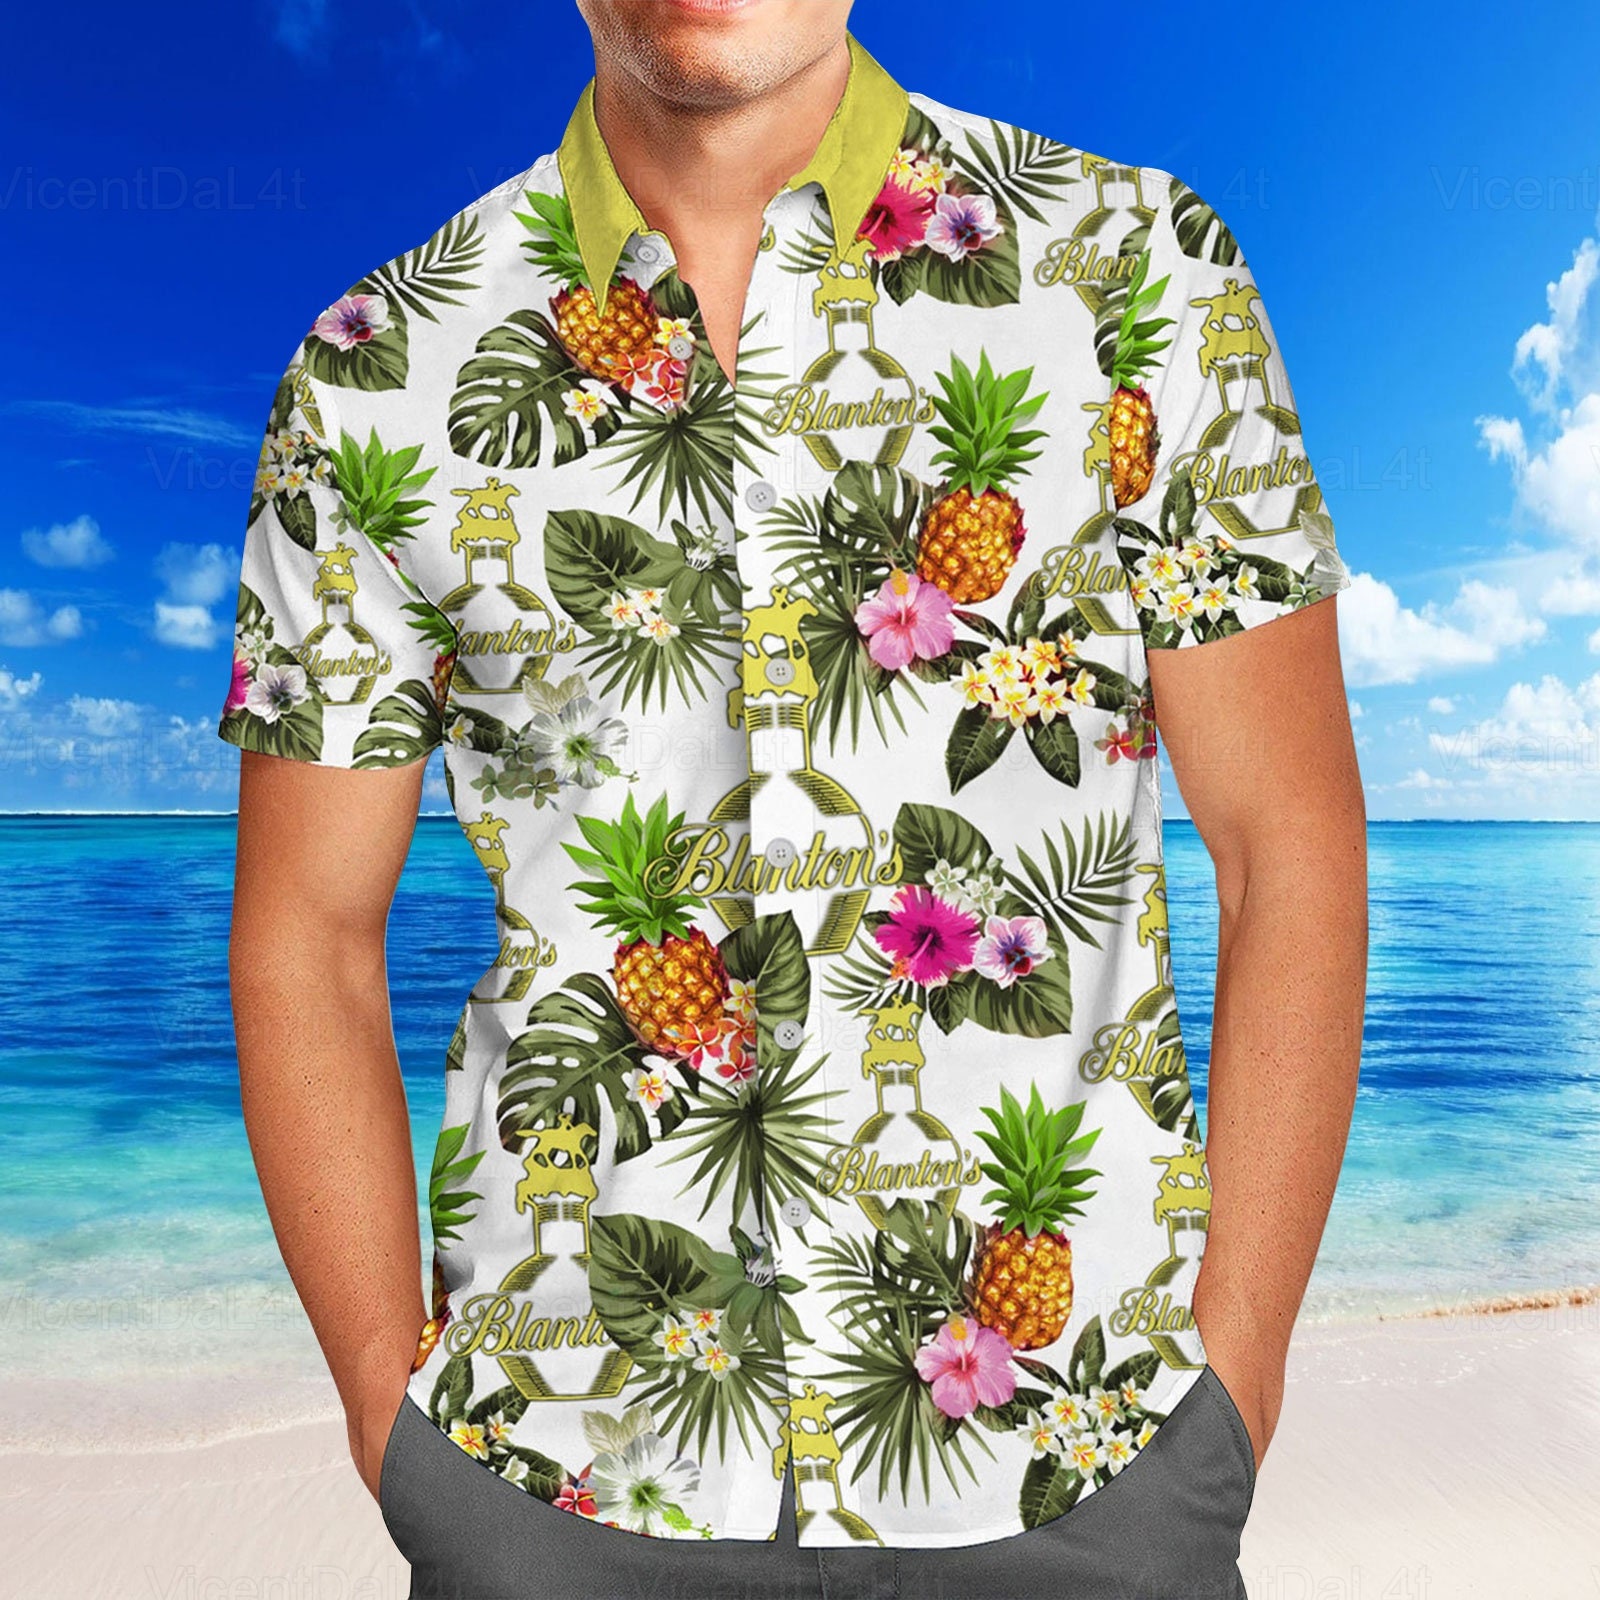 Blanton's Bourbon Hawaiian Shirt sold by Dari Heroic | SKU 41453557 ...